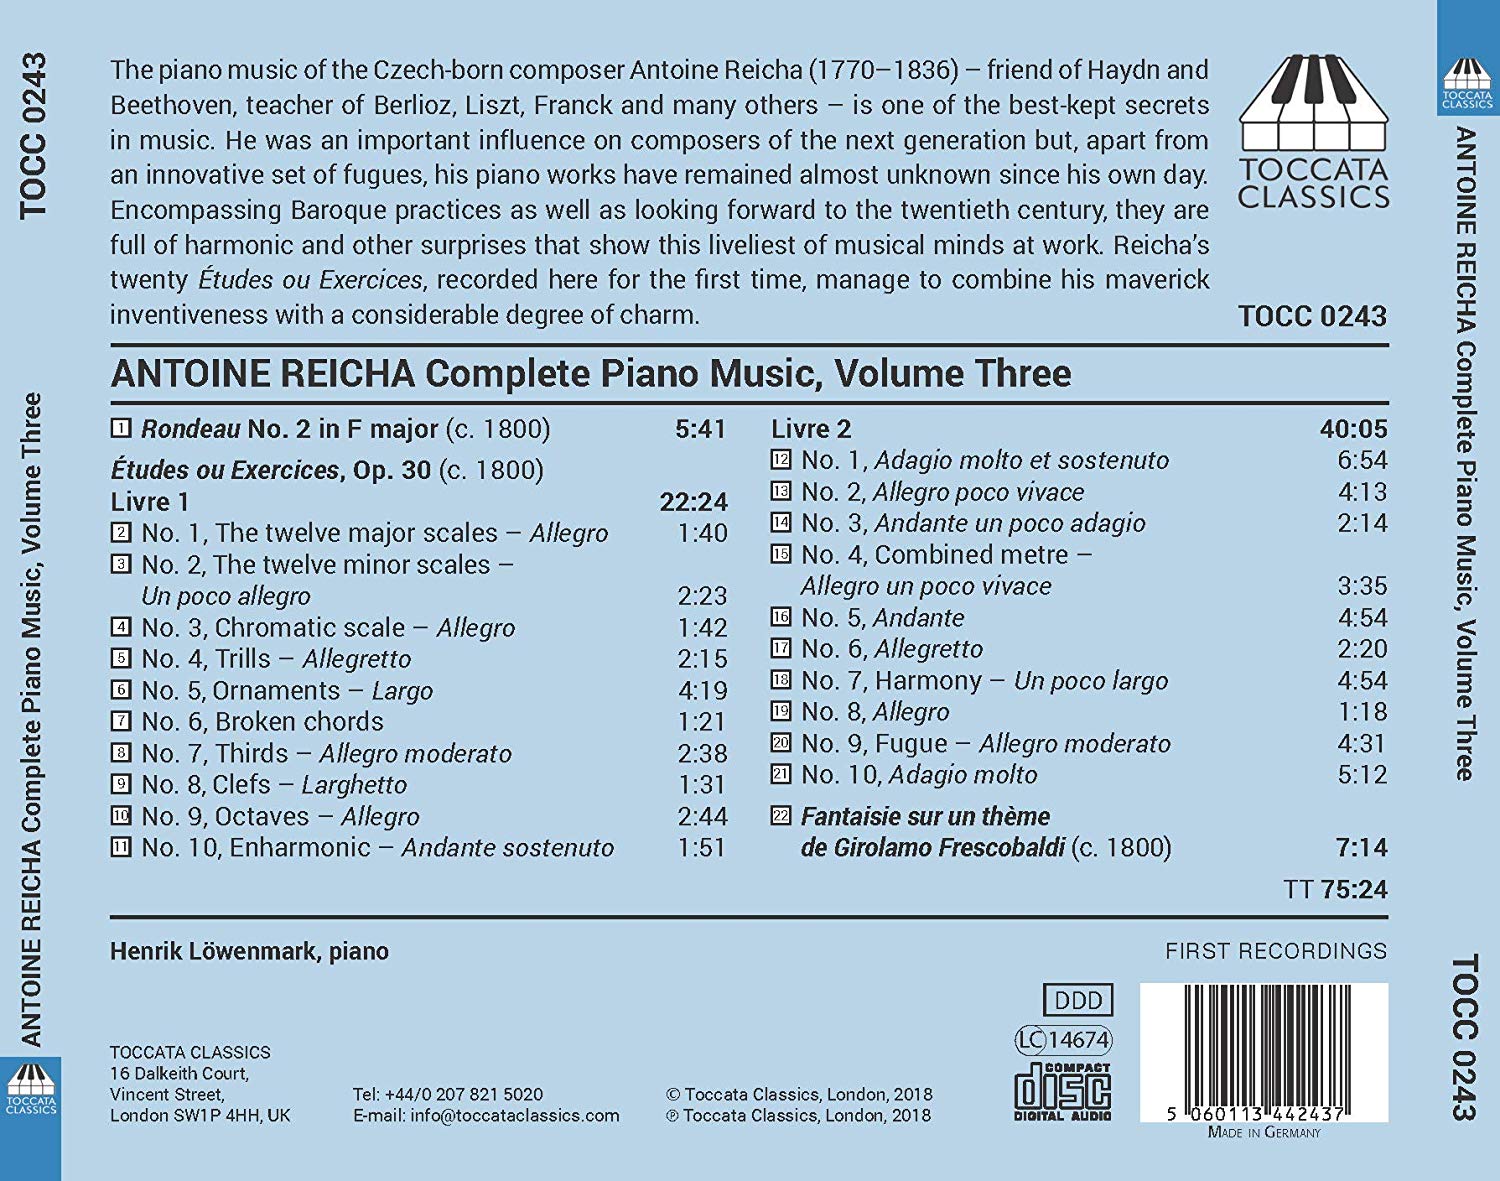 Henrik Lowenmark 안톤 라이하: 피아노 작품 전곡 3집 - 론도, 연습곡, 환상곡 (Antoine Reicha: Complete Piano Music Vol.3 - Rondeau, Etudes, Fantaisie)